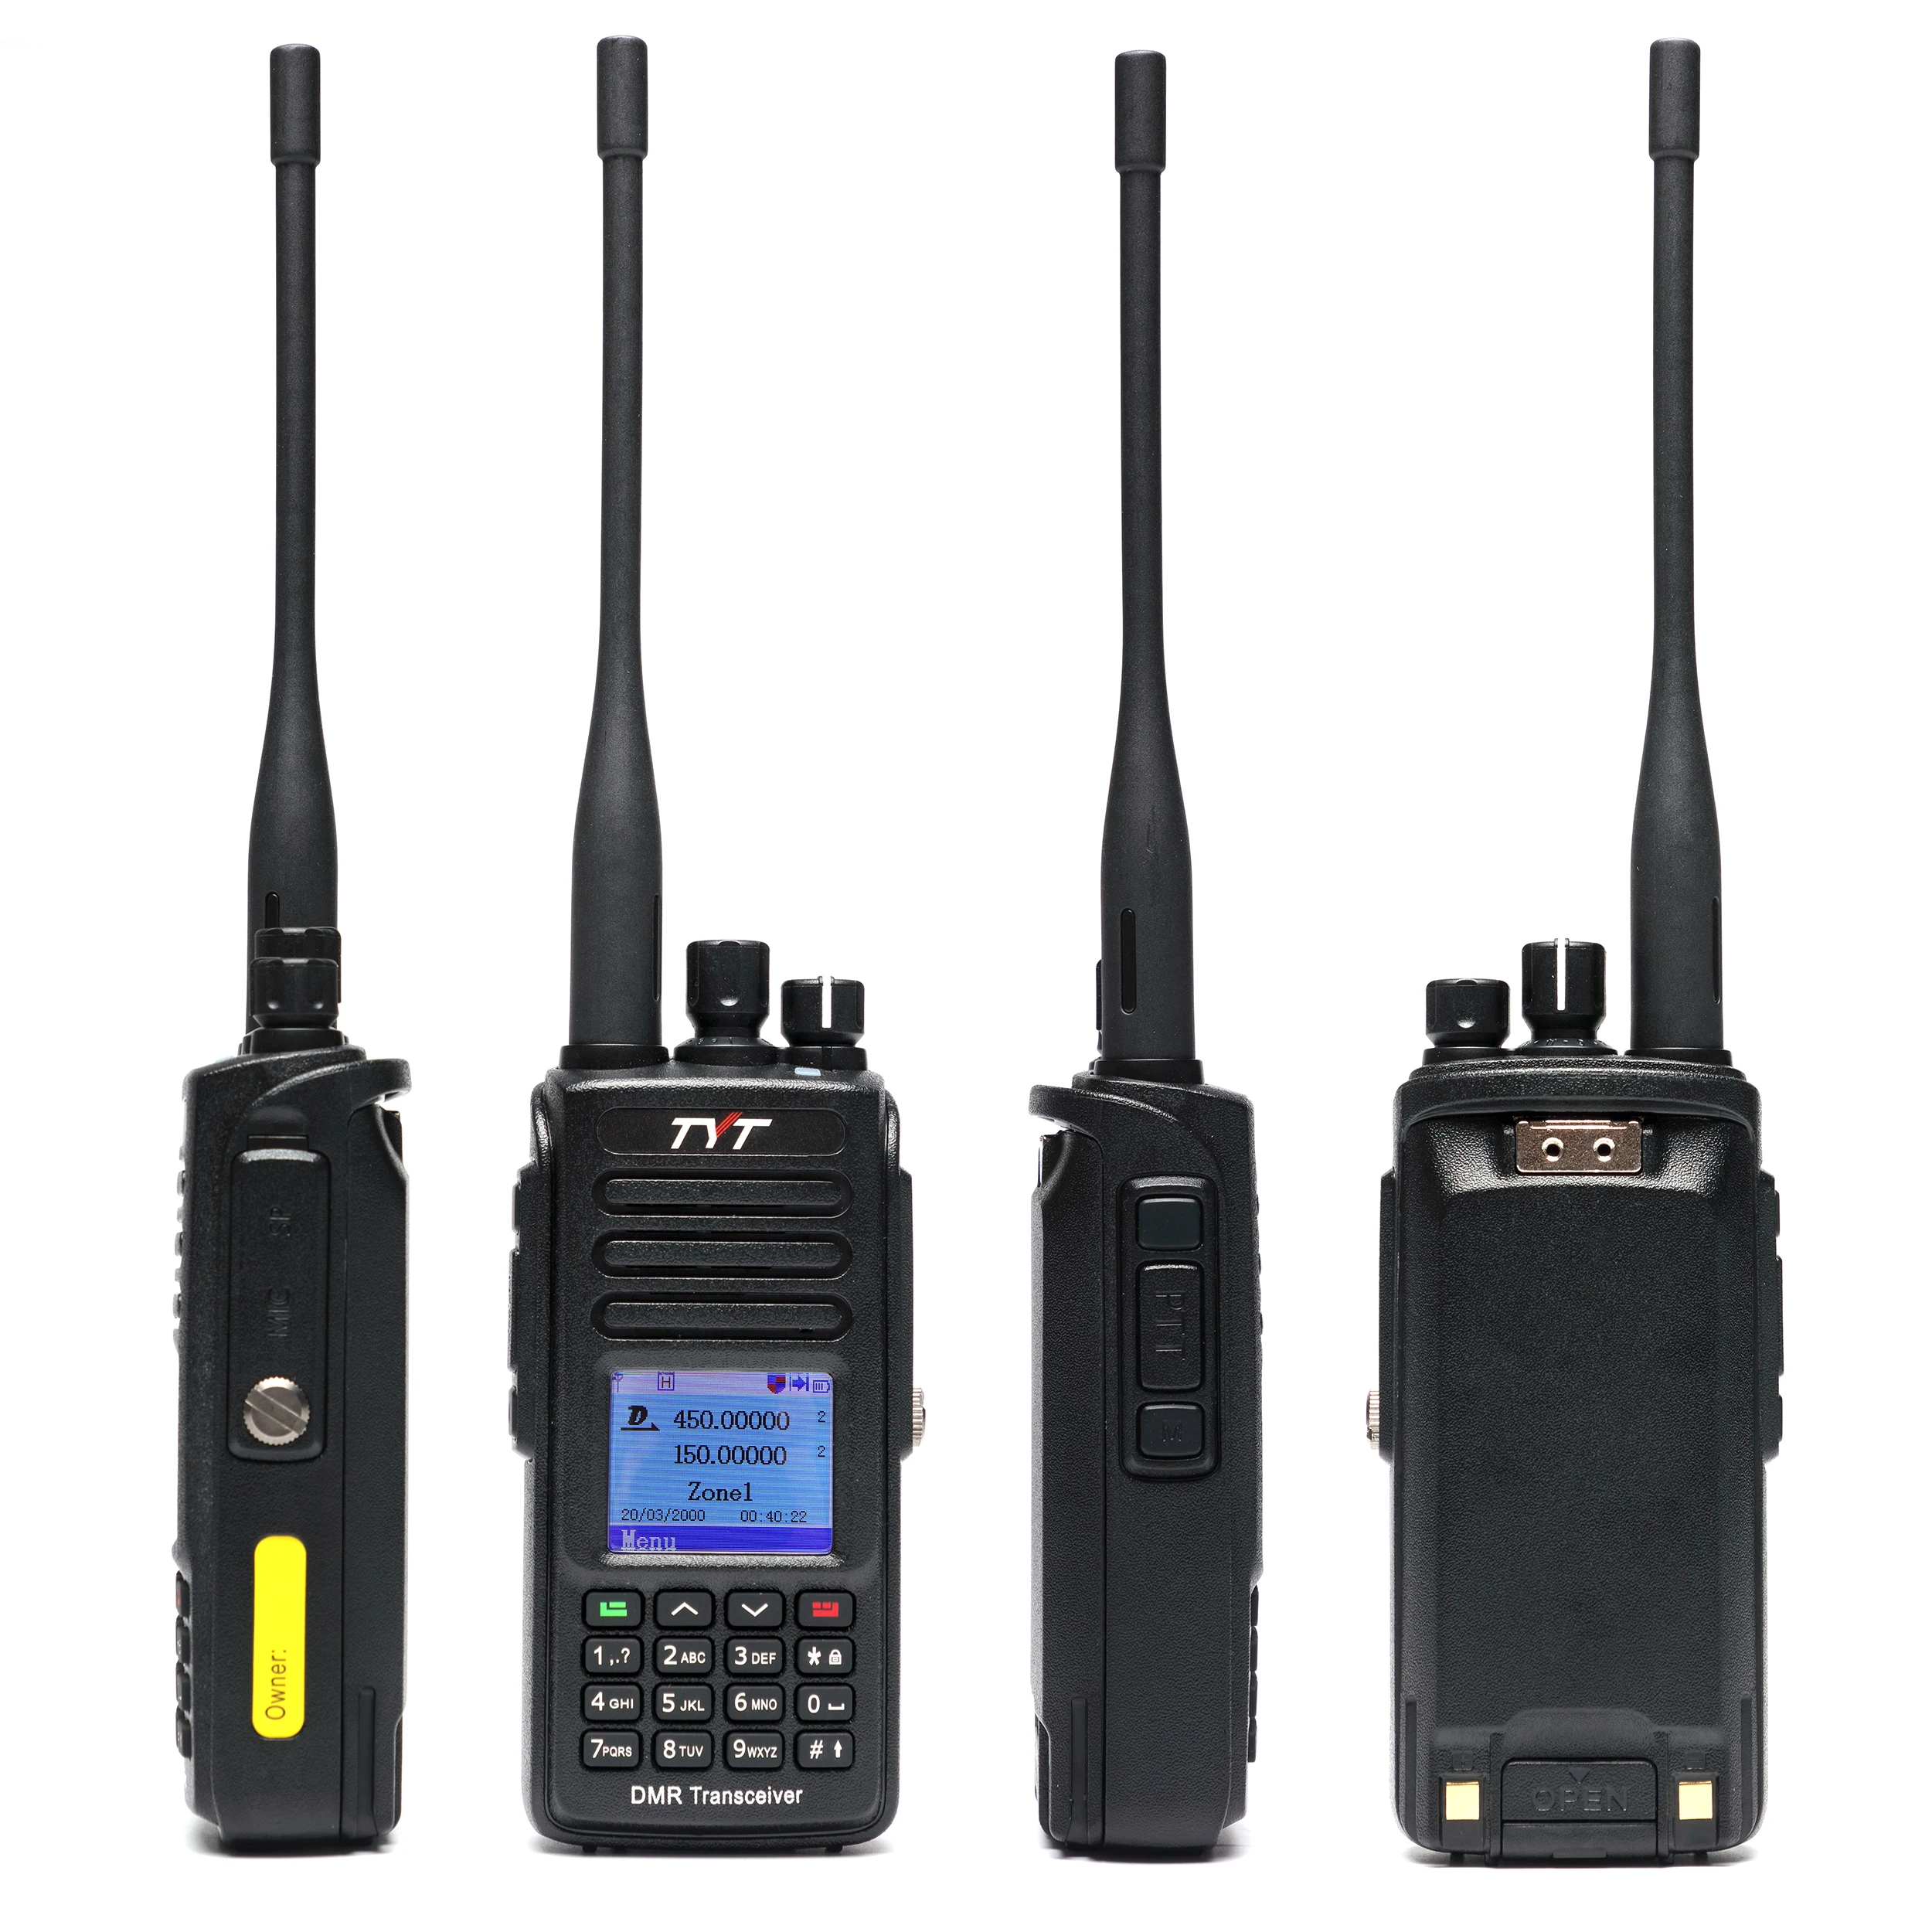 Tyt MD-UV380/uv390 dmrラジオ,5ワット,GPSオプションのデュアルバンドVhfデジタルウォーキートーキー  (ハム),カートリッジ付き。 AliExpress